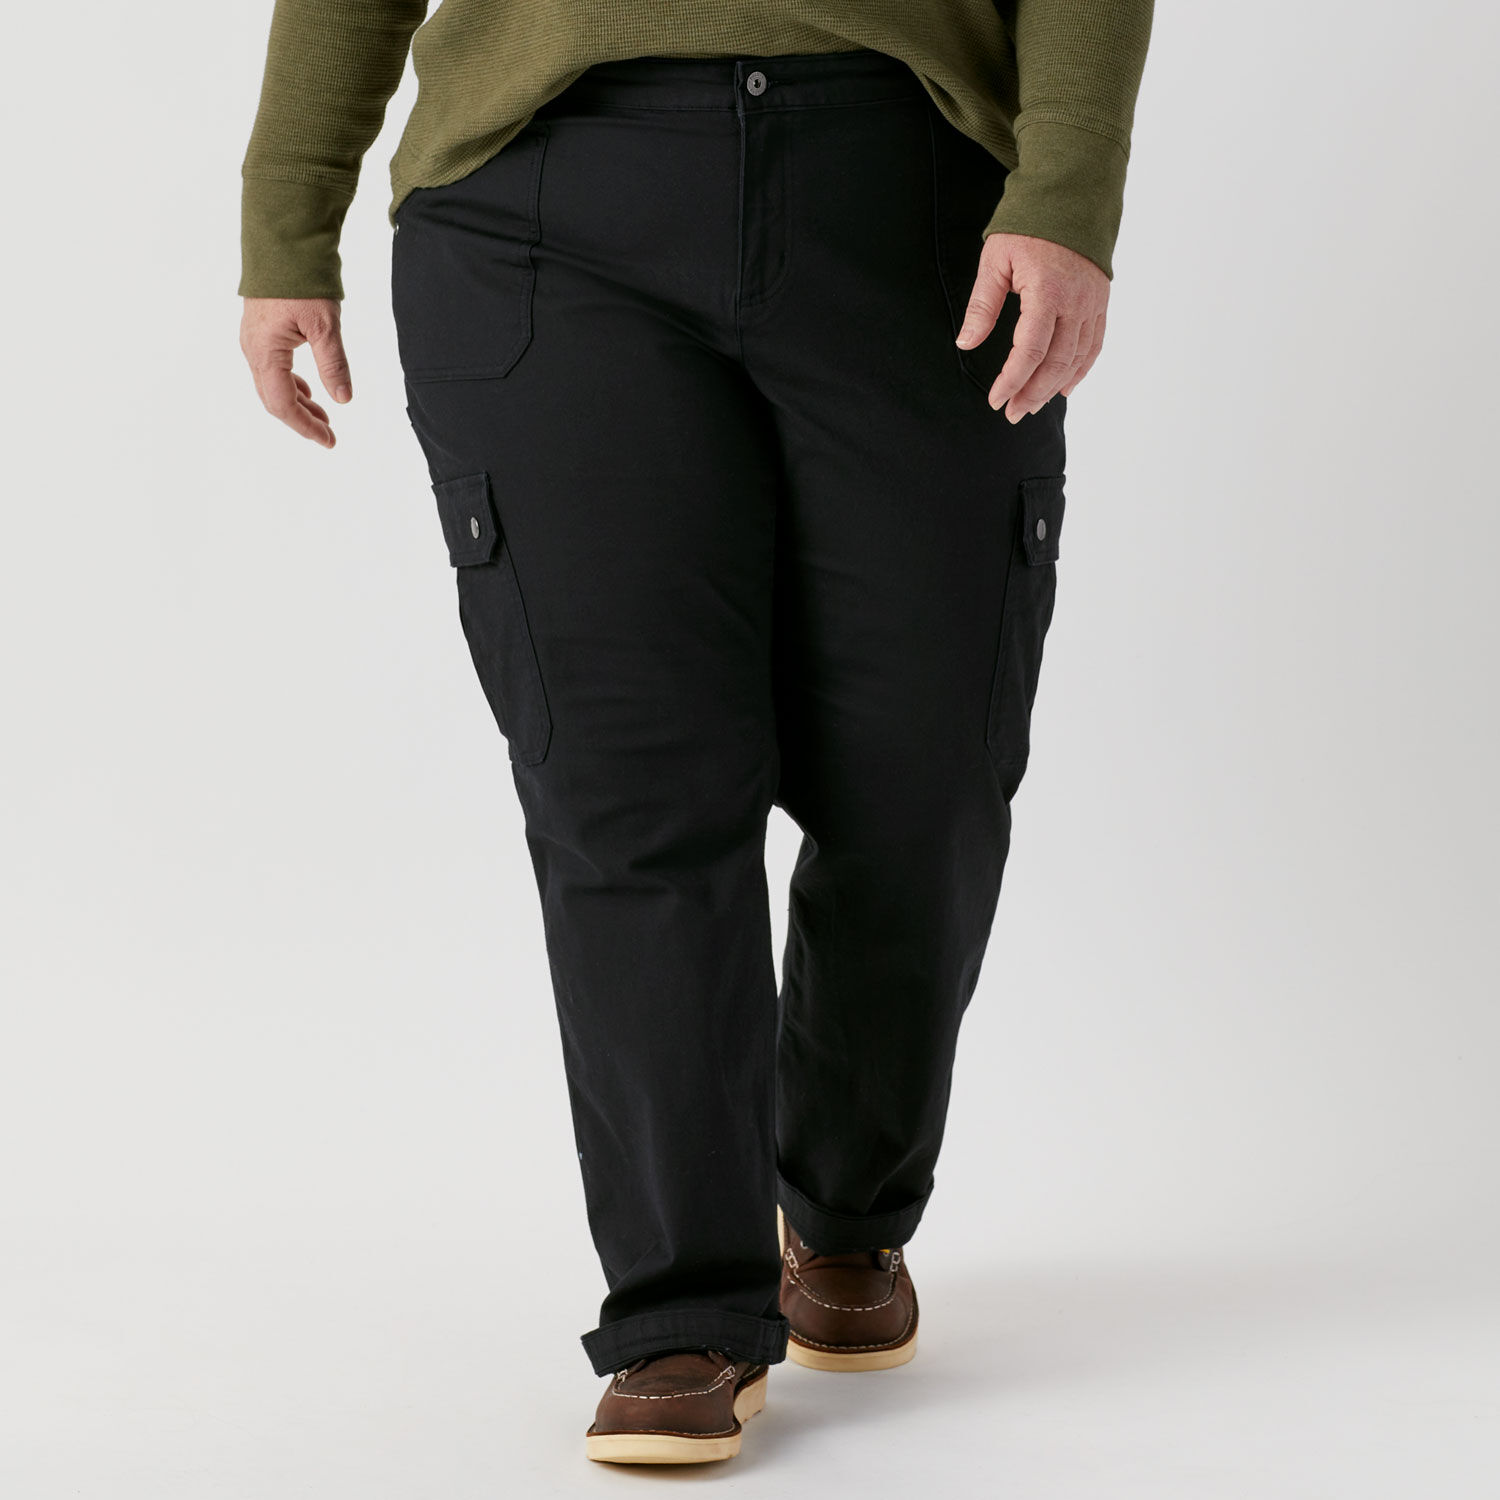 Buy Beige Cargo Pants With Pockets online